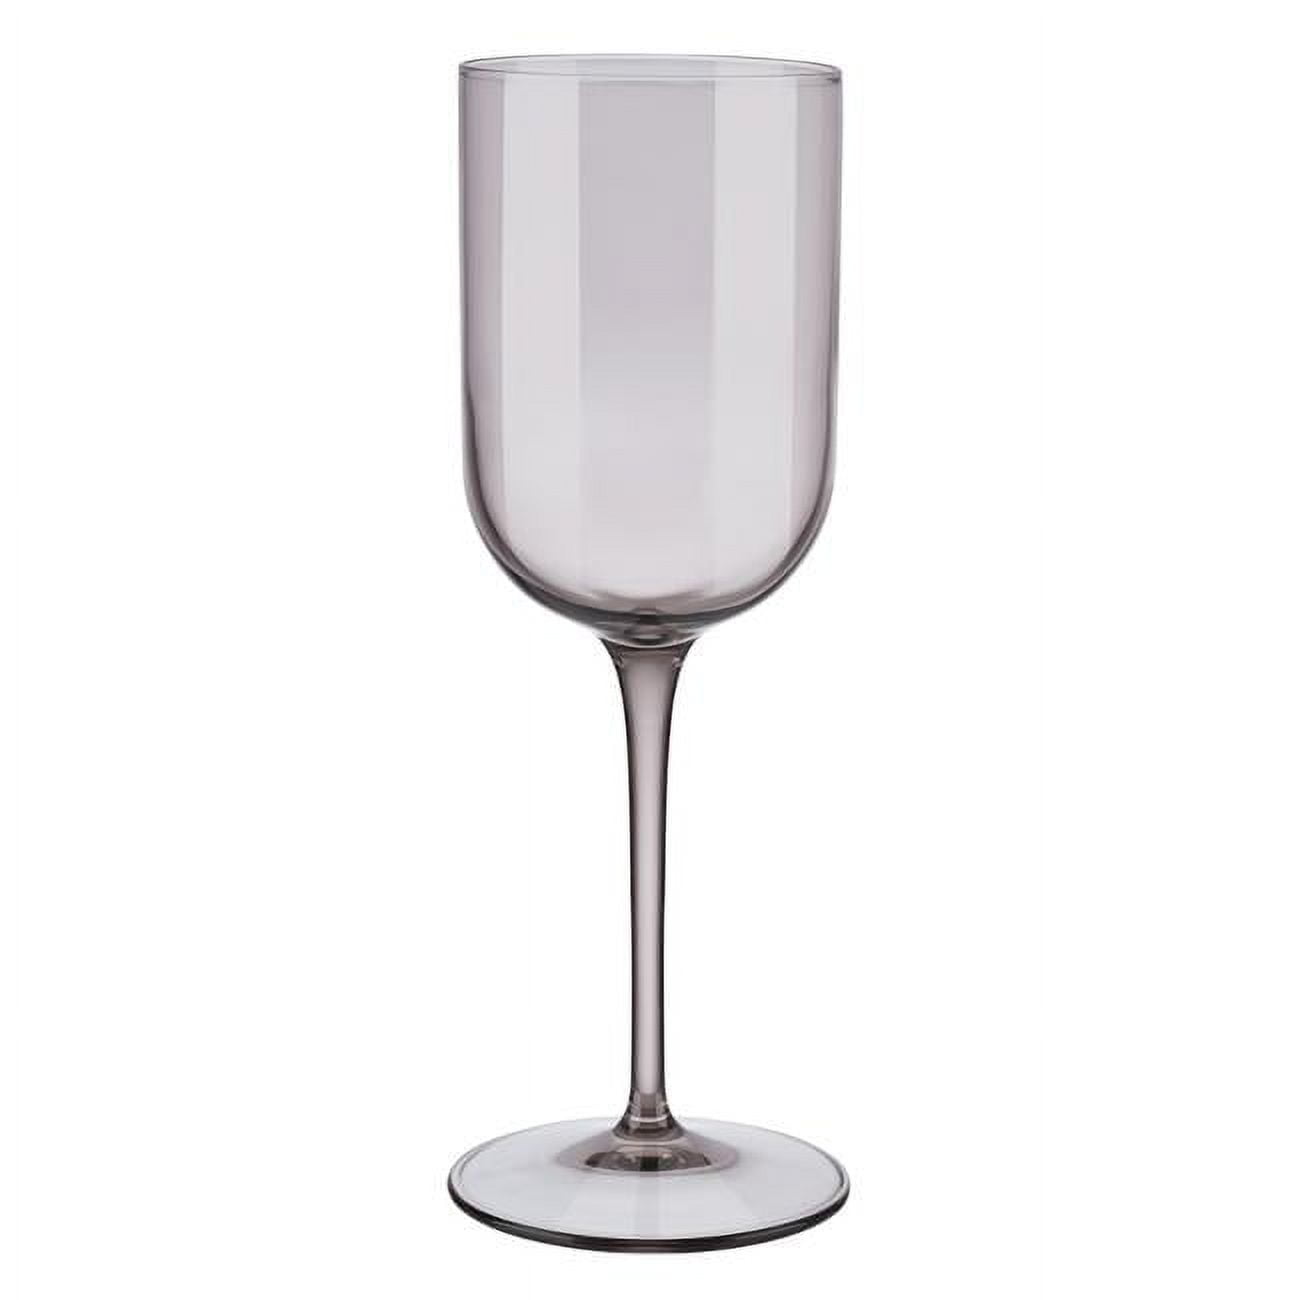 Picture of Blomus 63942 9.5 oz Fuum White Wine Glass, Fungi - Set of 4